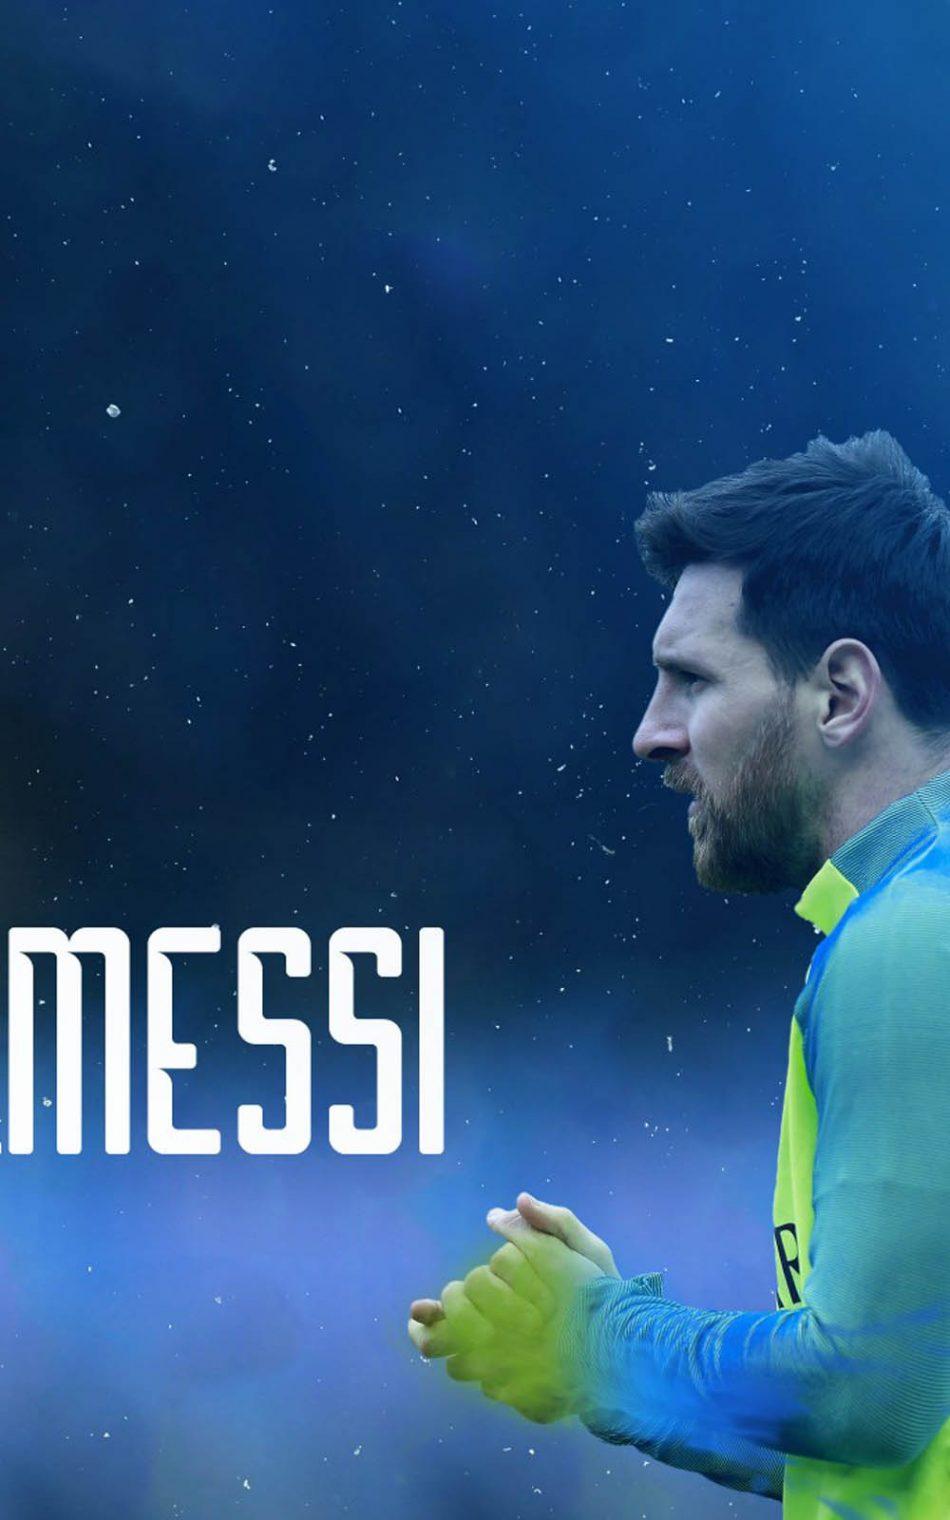 Lionel Messi 2017 Free 4K Ultra HD Mobile Wallpaper